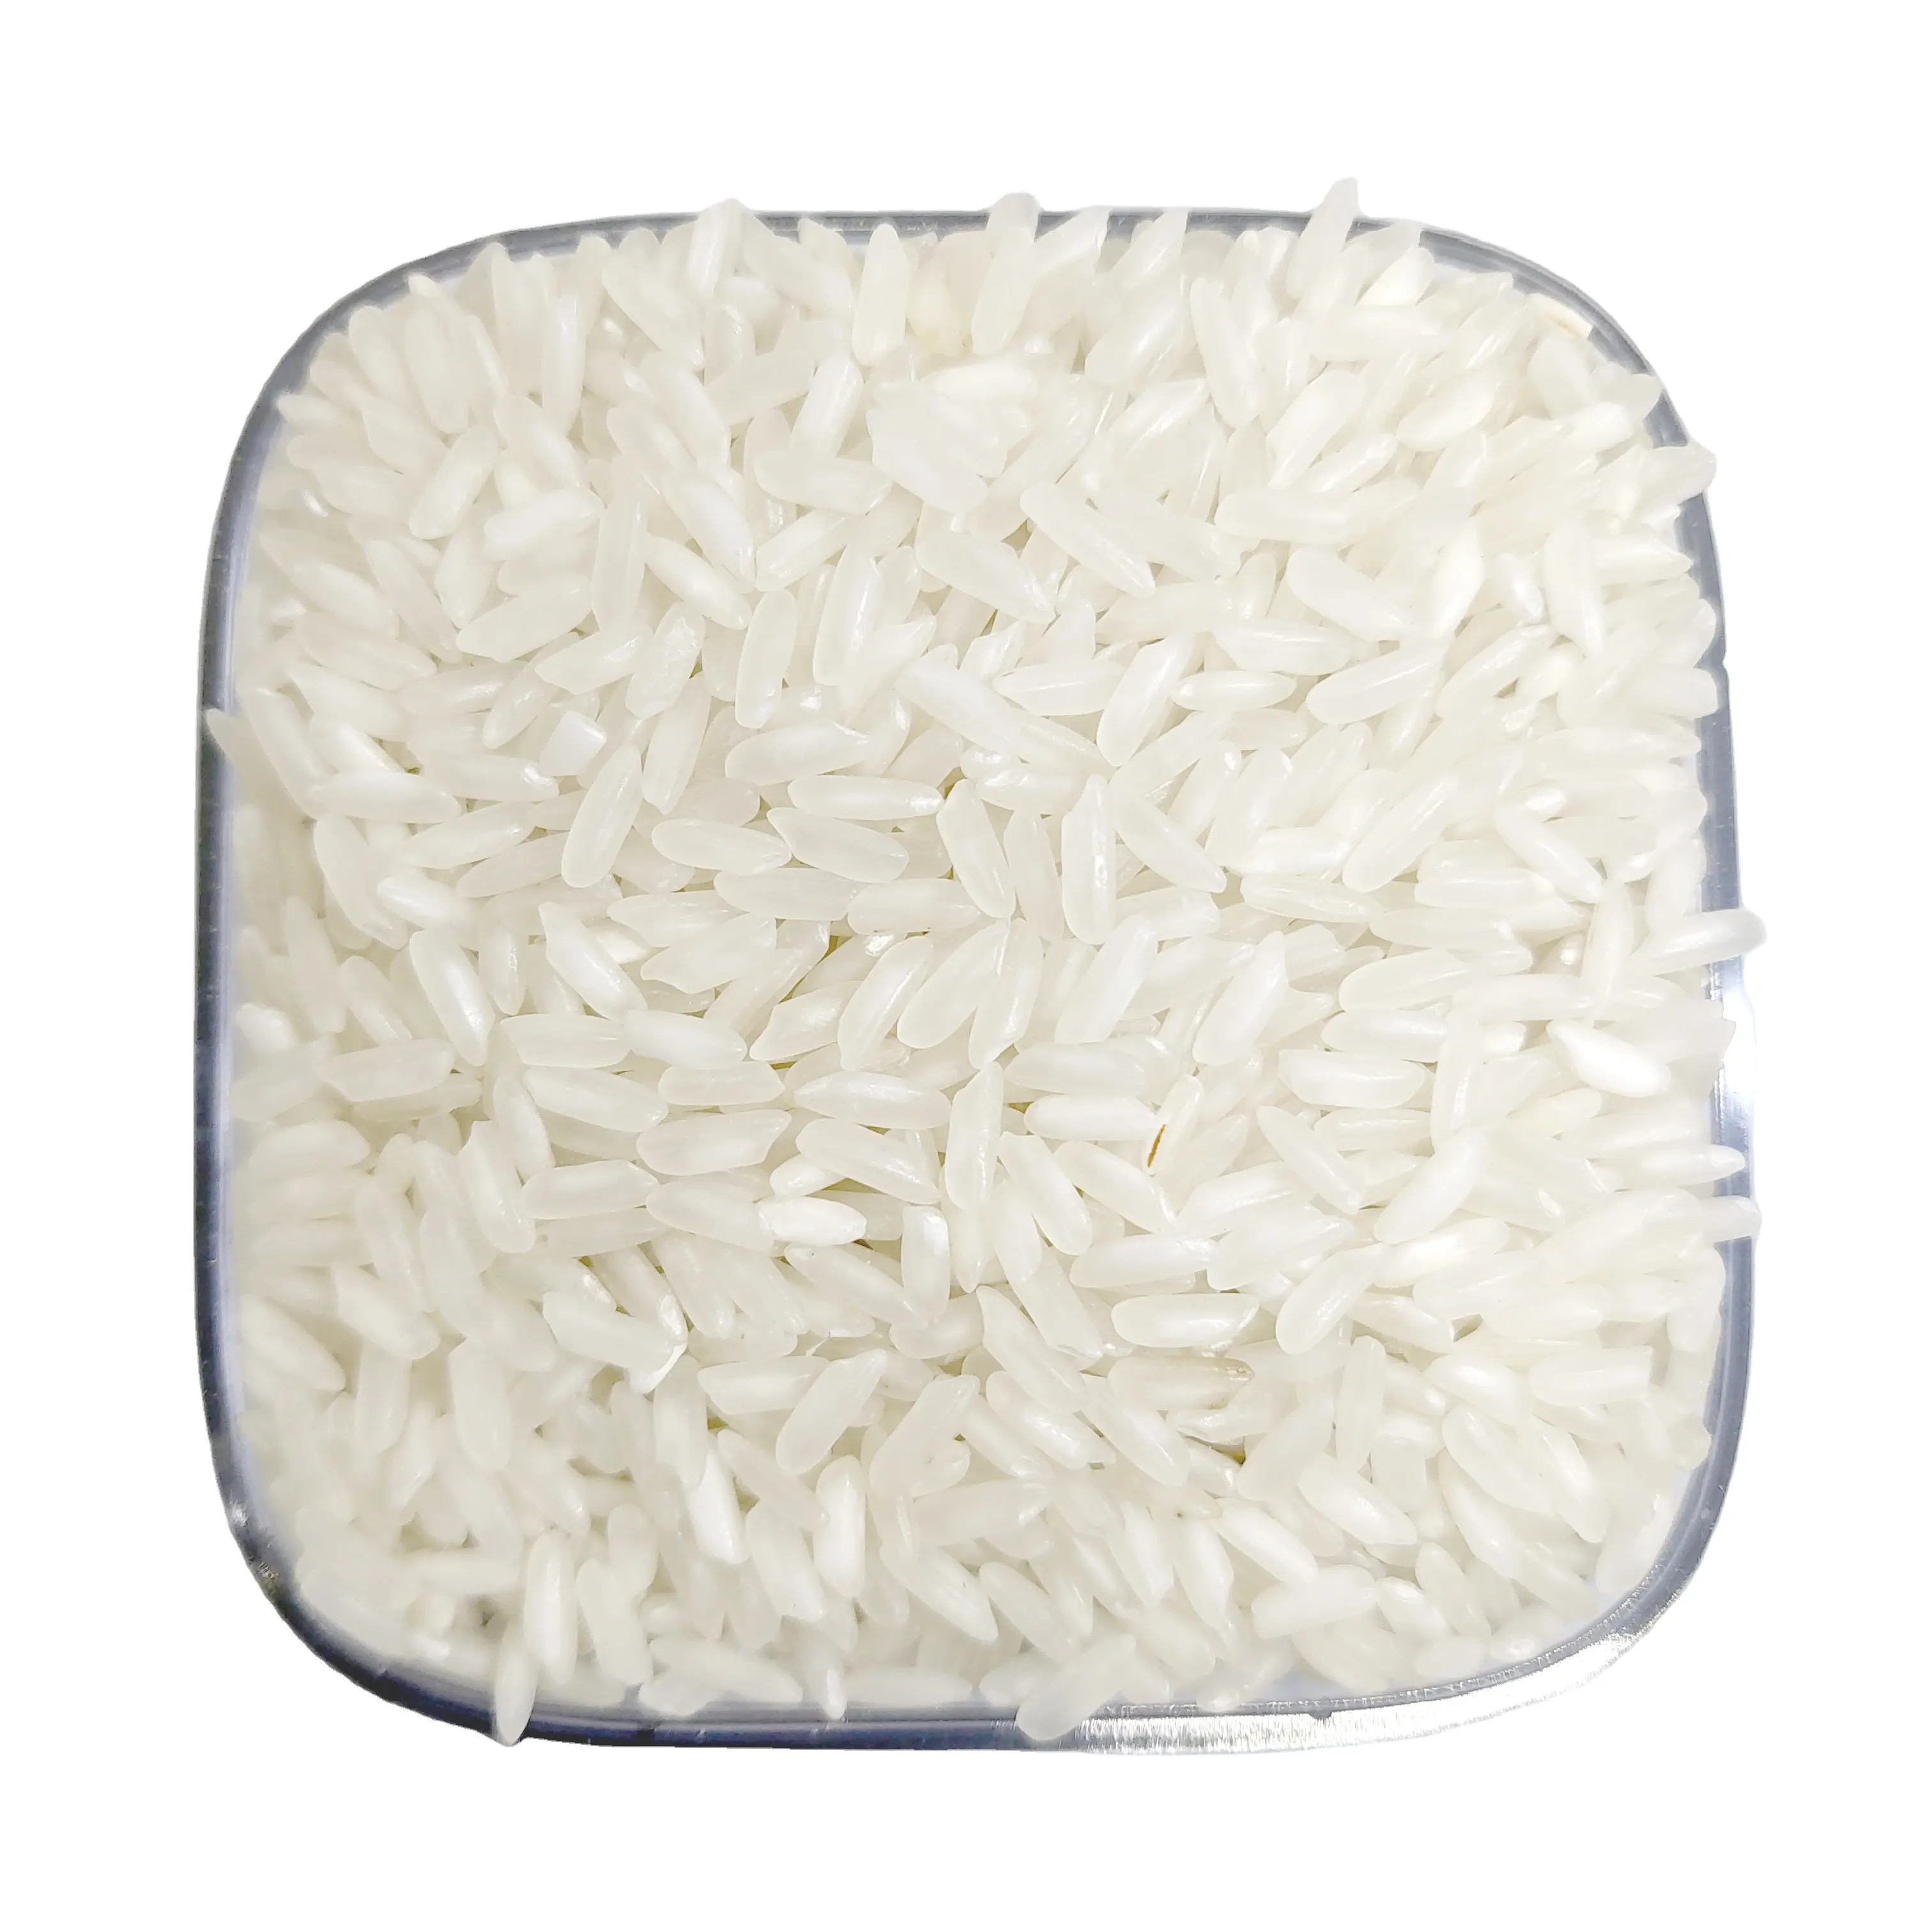 Quality Sella 1121 Basmati Rice wholesale /Brown Long Grain 5% Broken White Rice